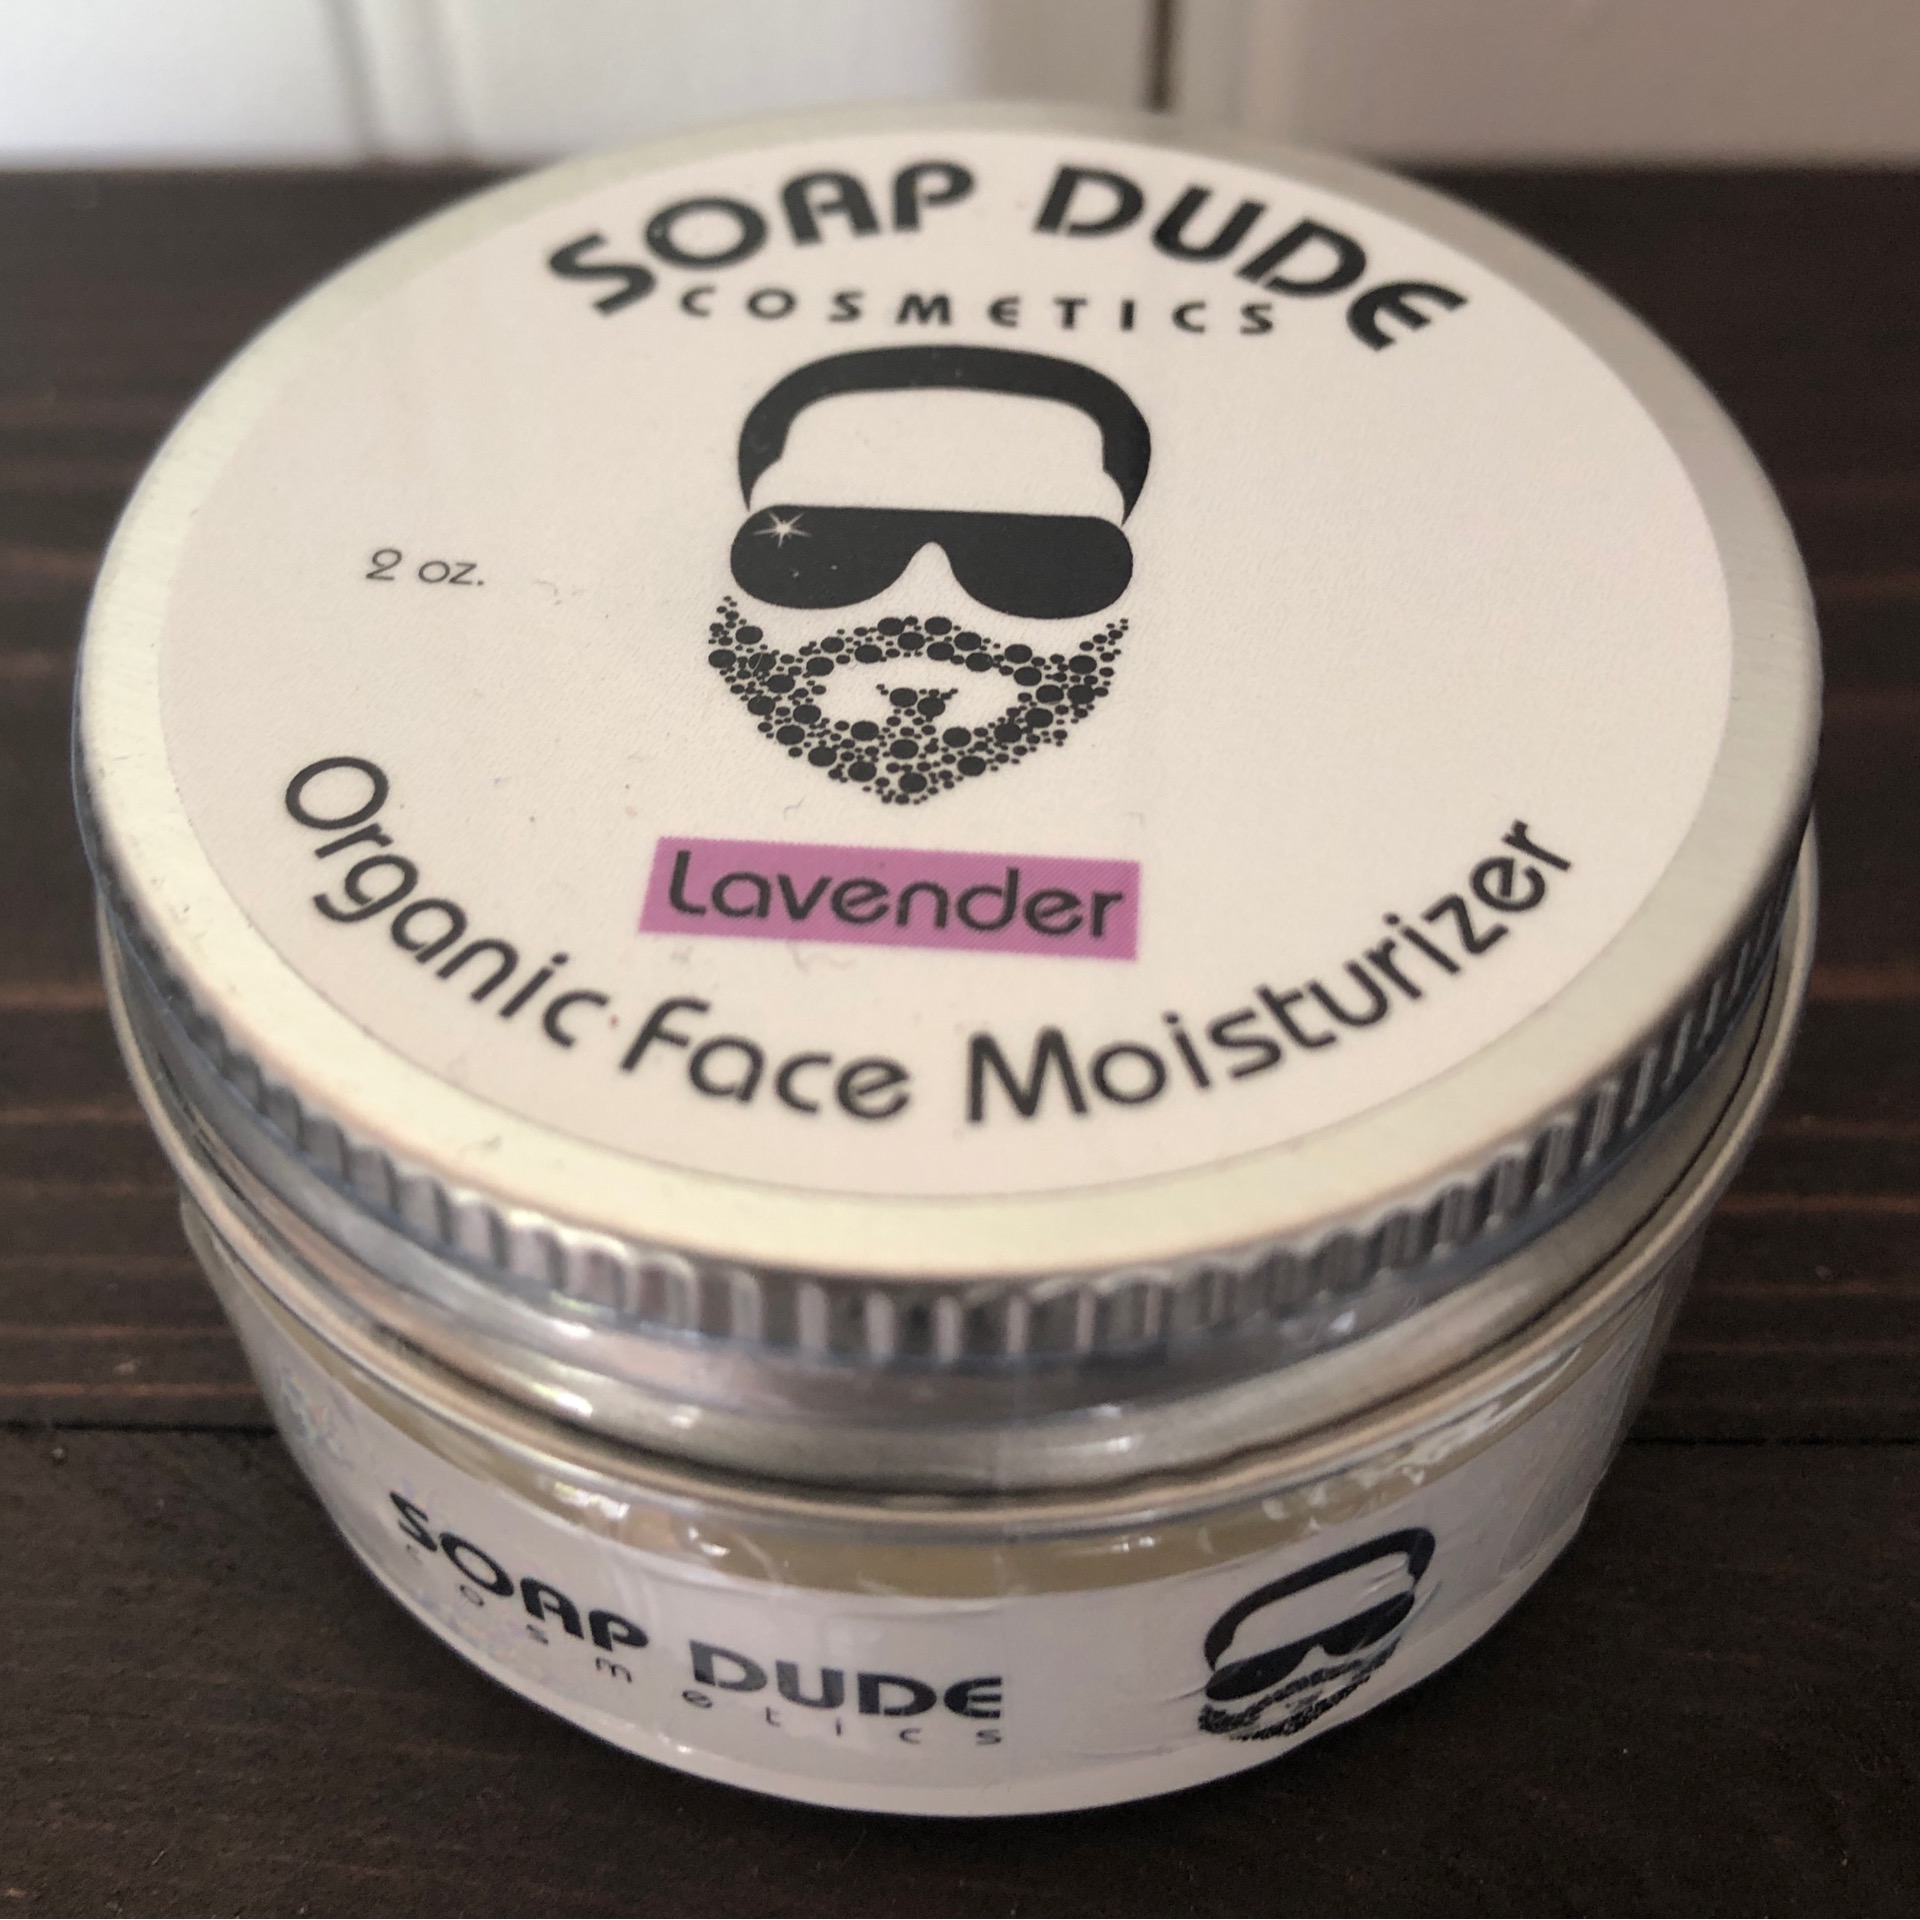 Soap Dude Cosmetics